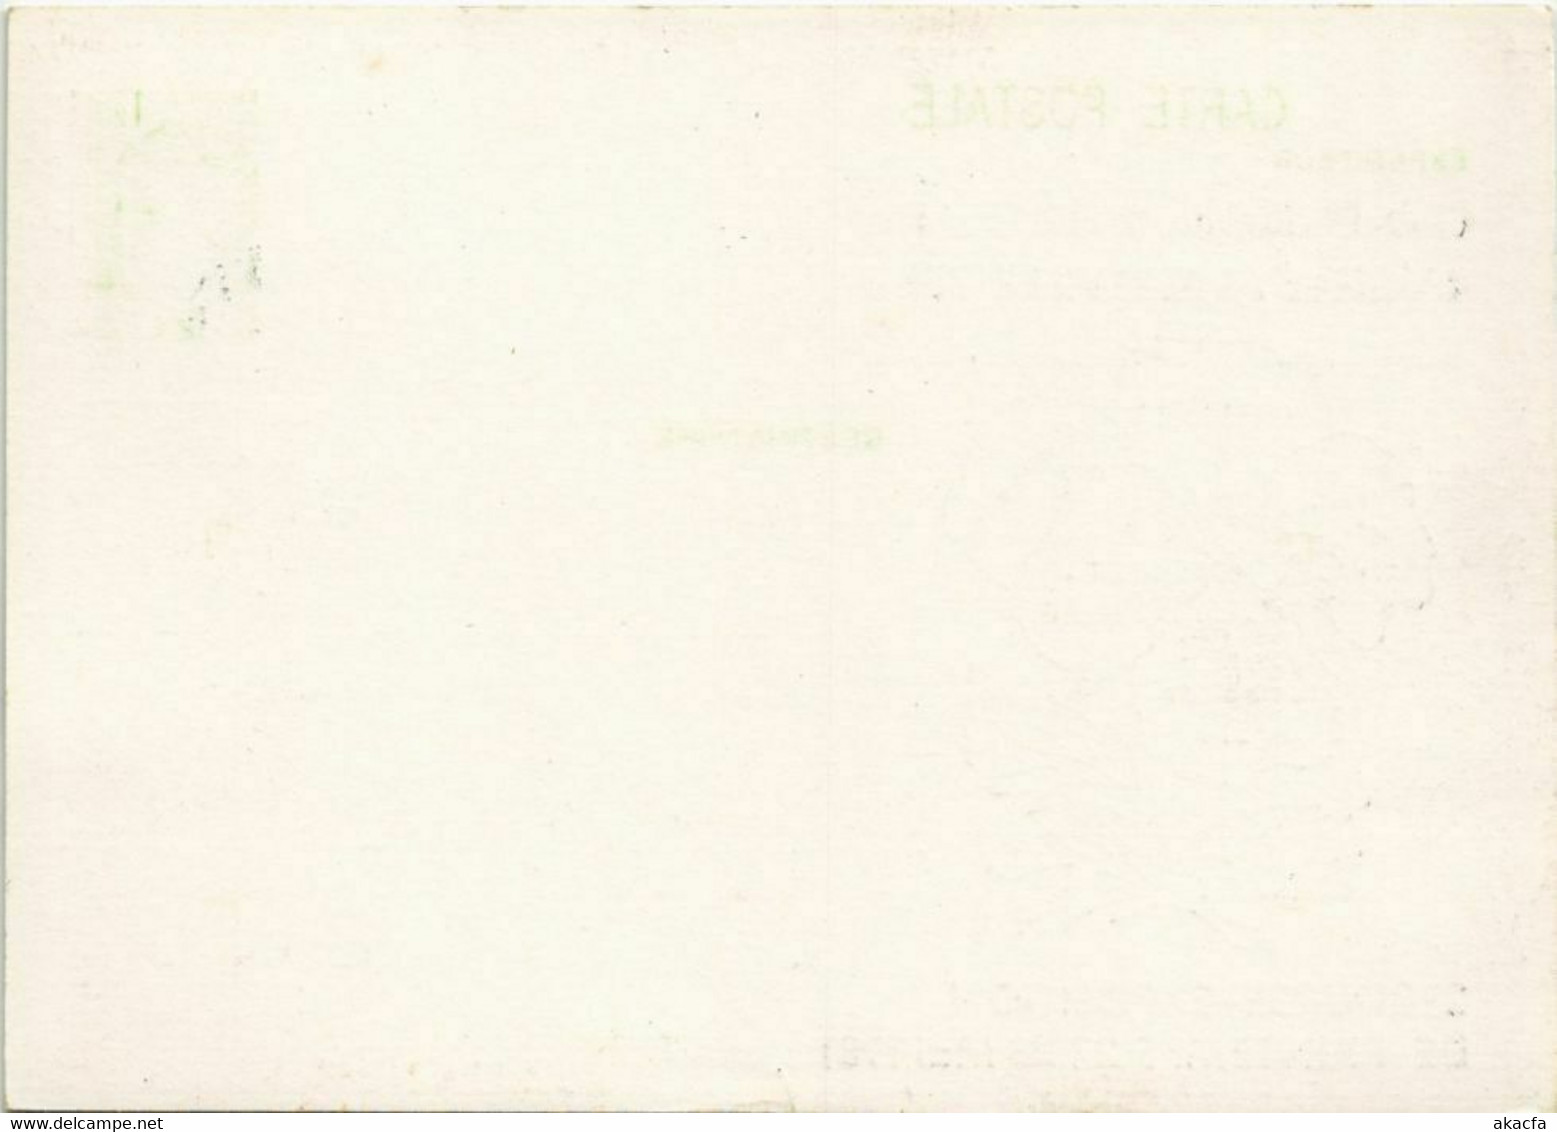 CPM ALBERTVILLE Card By The Club Philatelique - Bourse-Exposition (1193517) - Albertville